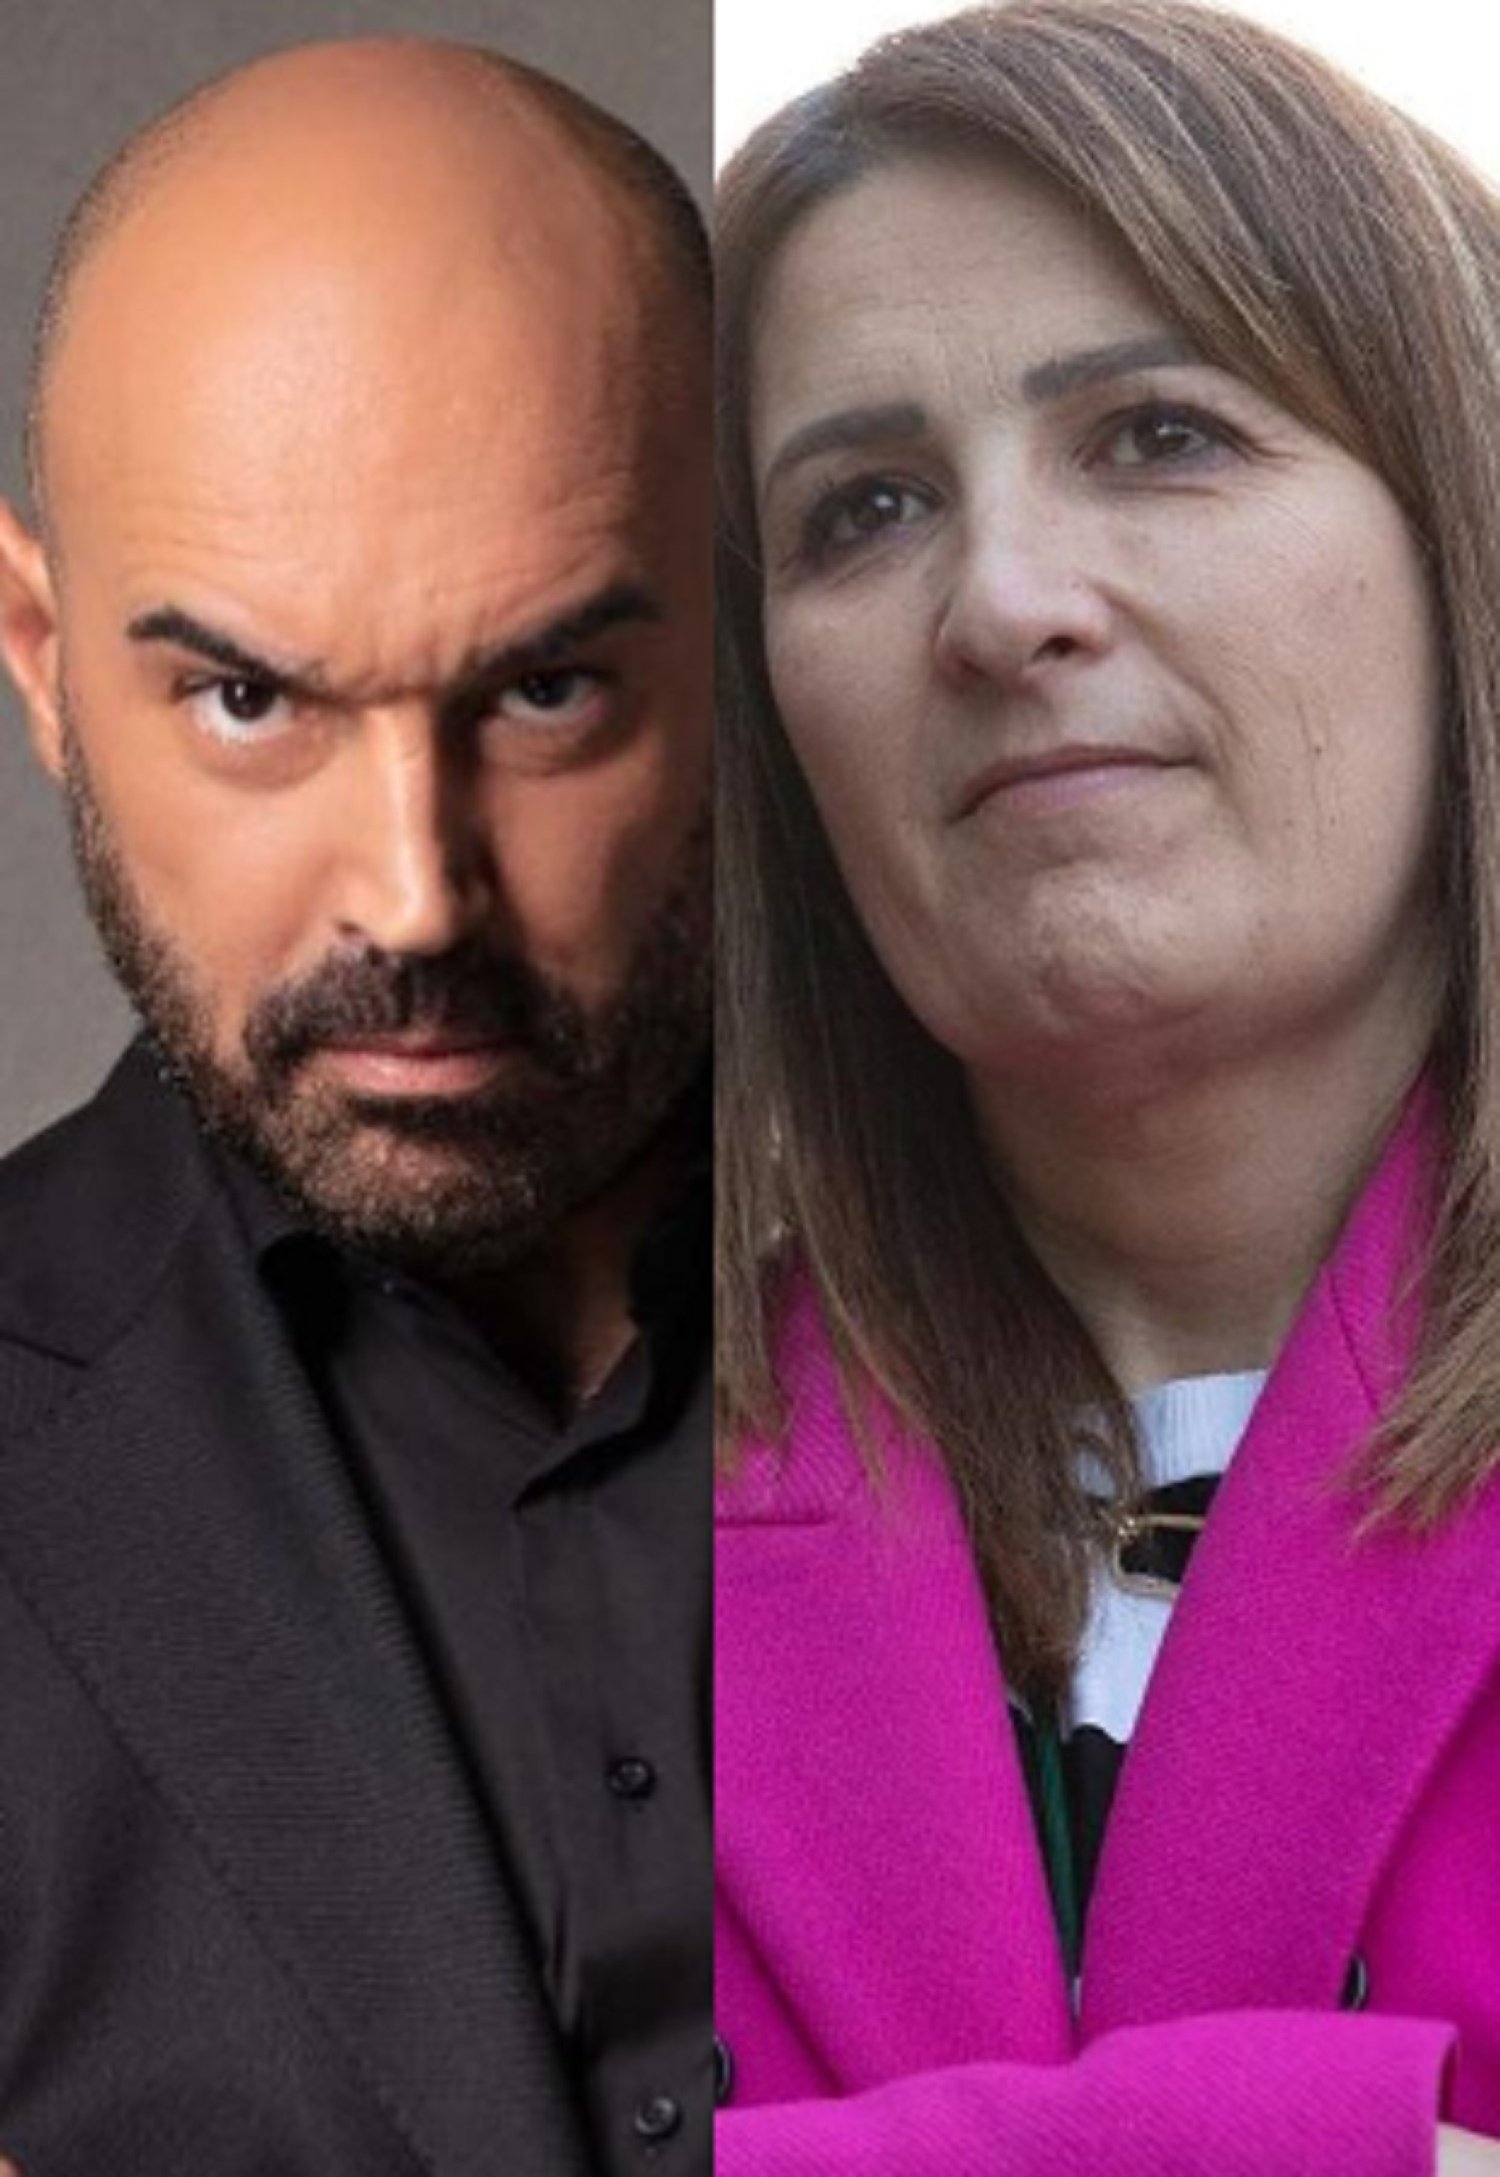 Imatge vomitiva a TV, Llucià Ferrer i Laura Fa esclaten: "¿¿Podemos acabar con esta mier**??"